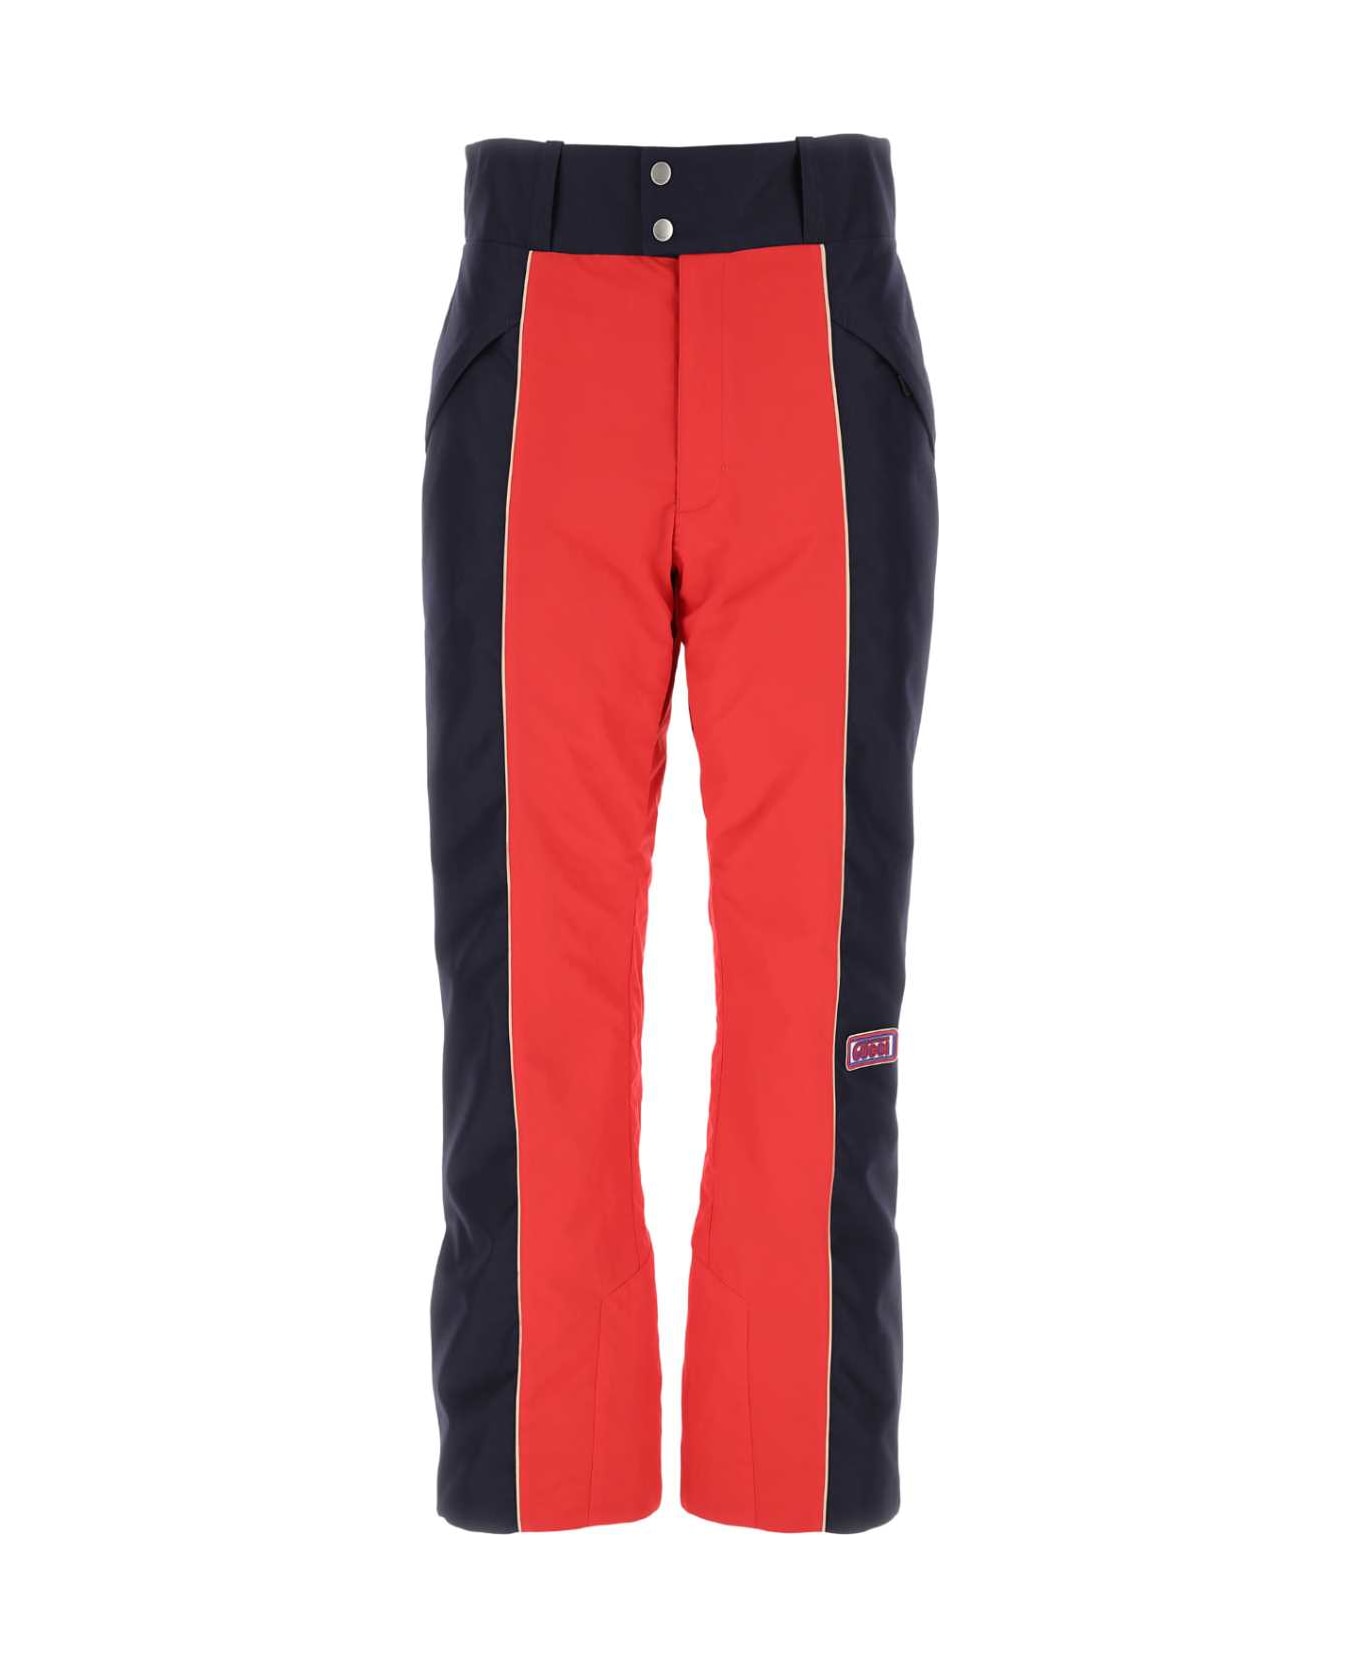 Gucci Two-tone Polyester Ski Pant - Multicolor